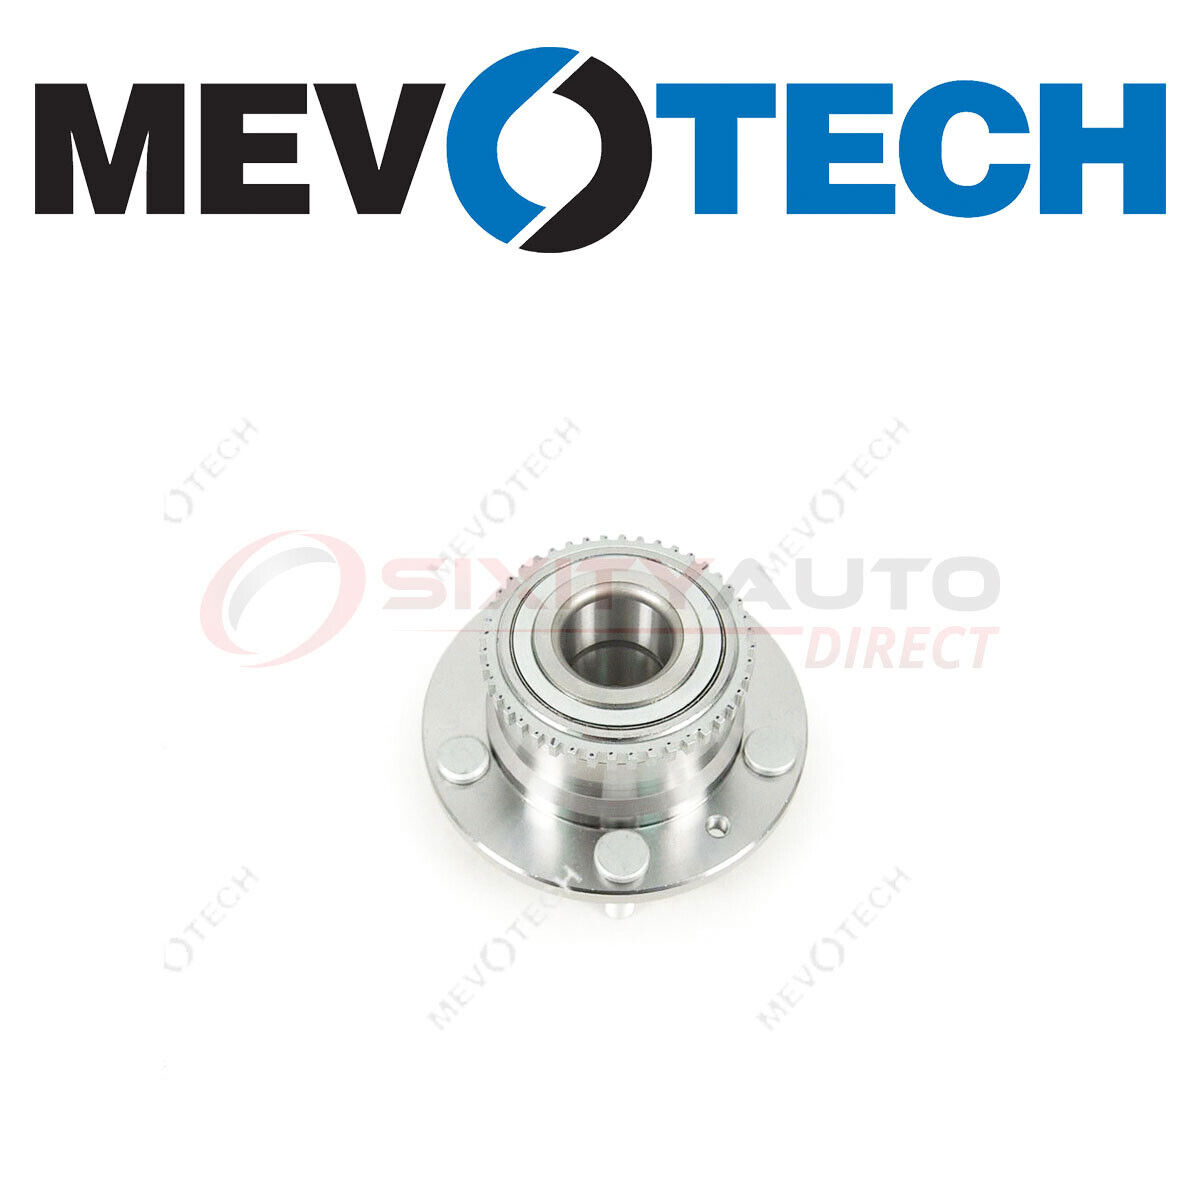 Mevotech Wheel Bearing & Hub Assembly for 2002-2003 Mazda Protege5 2.0L L4 - ha